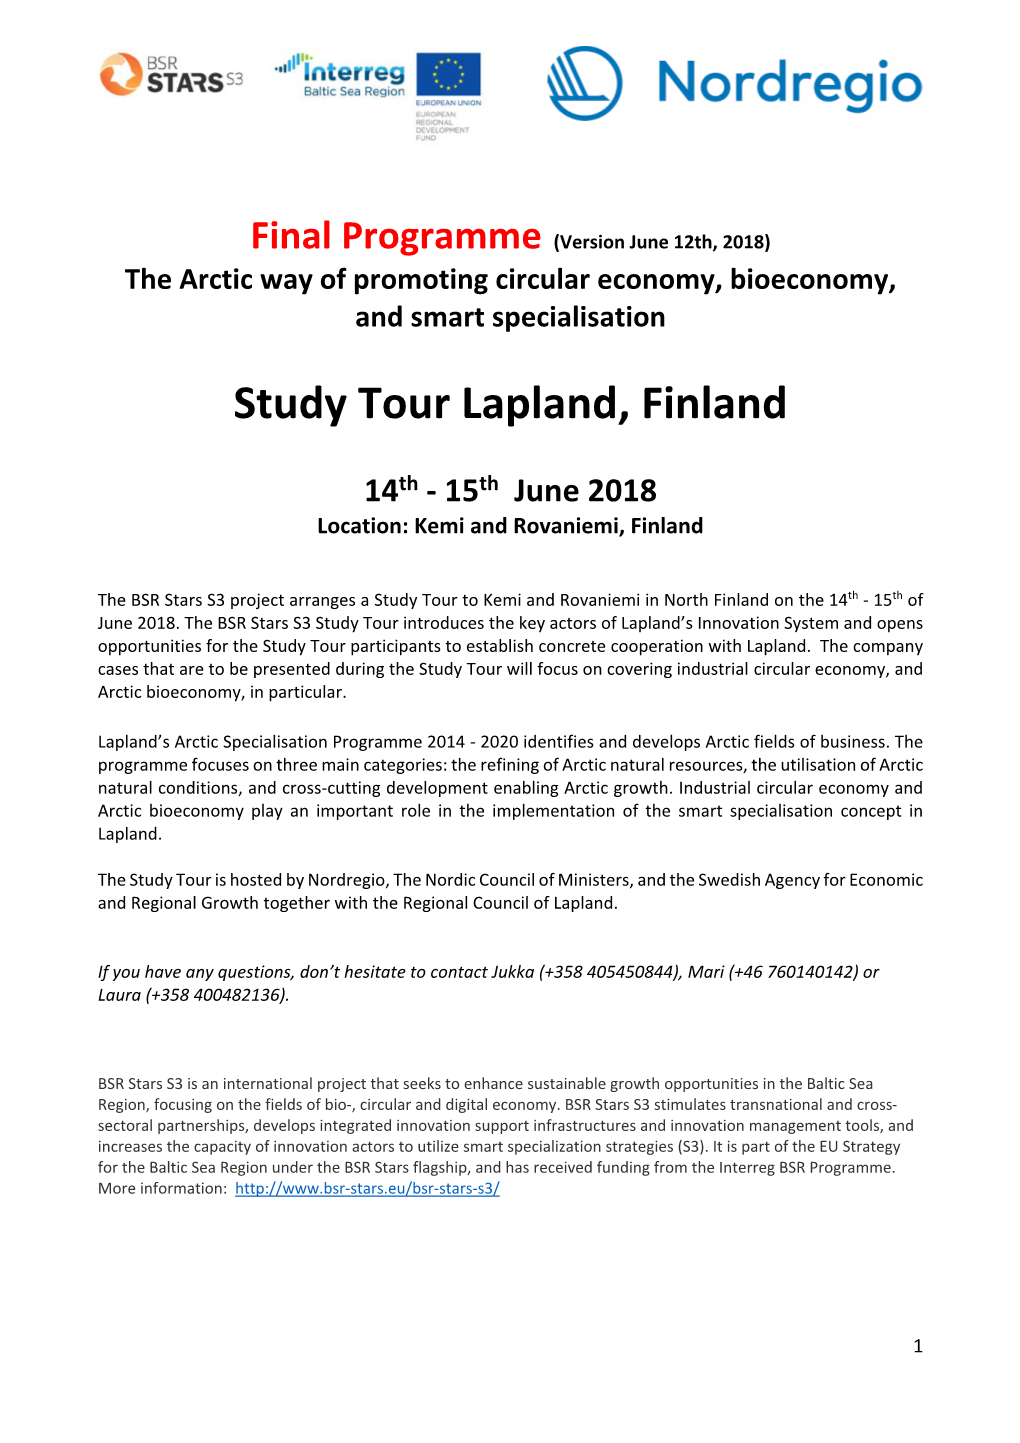 Study Tour Lapland, Finland